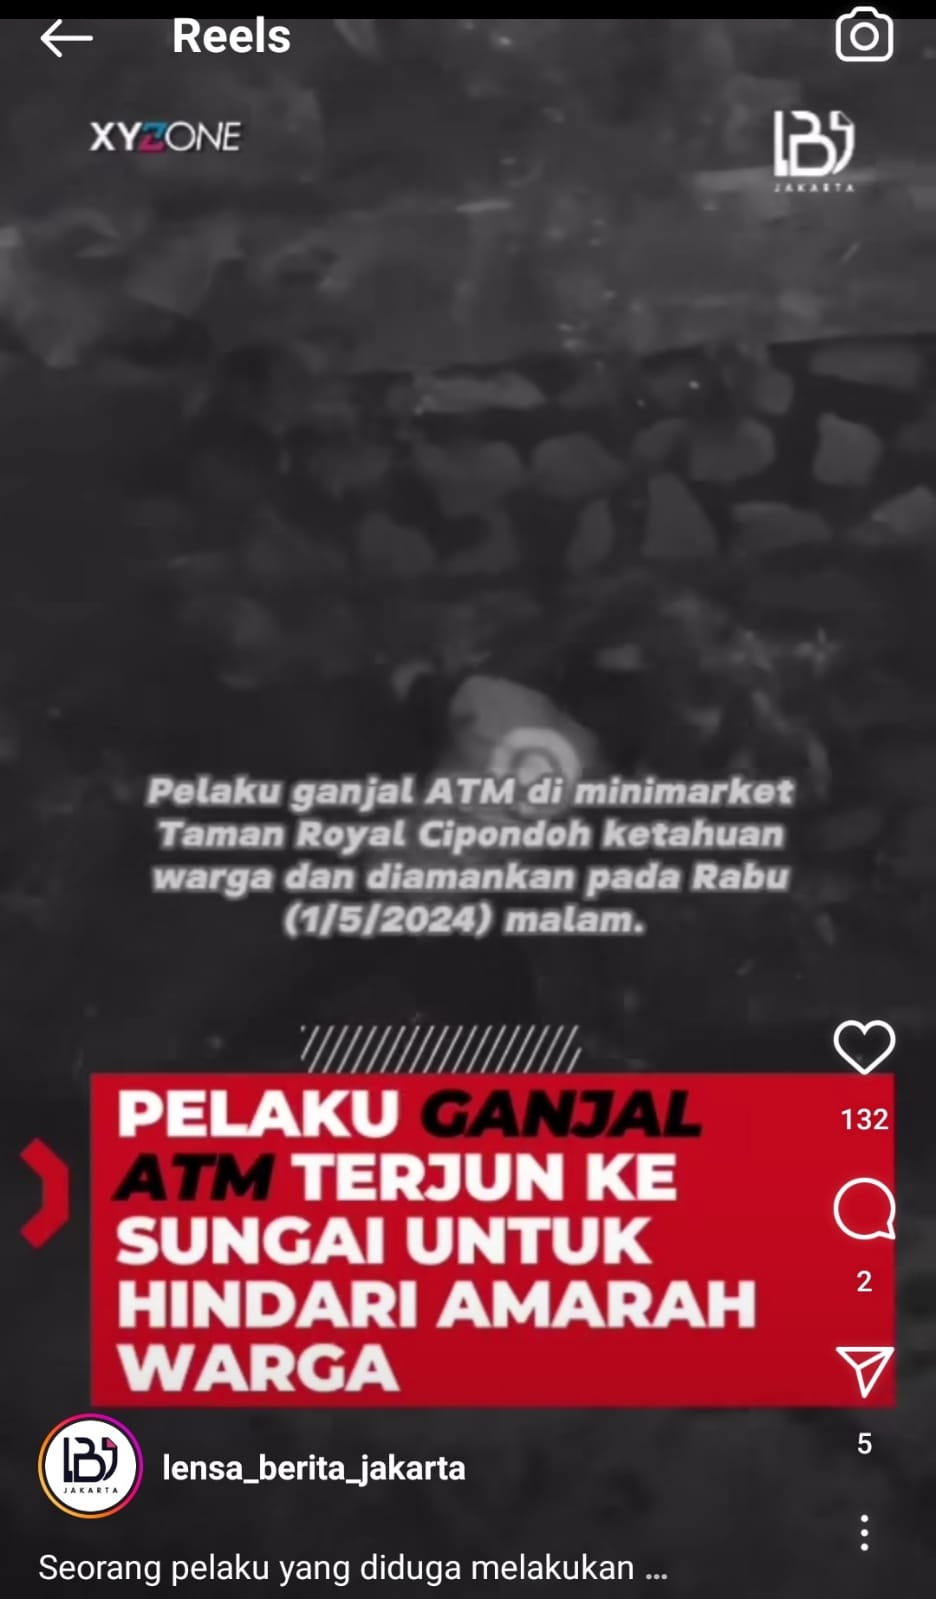 Sindikat Ganjal ATM Kepergok  di Tangerang, Nekat Kabur Terjun ke Kali